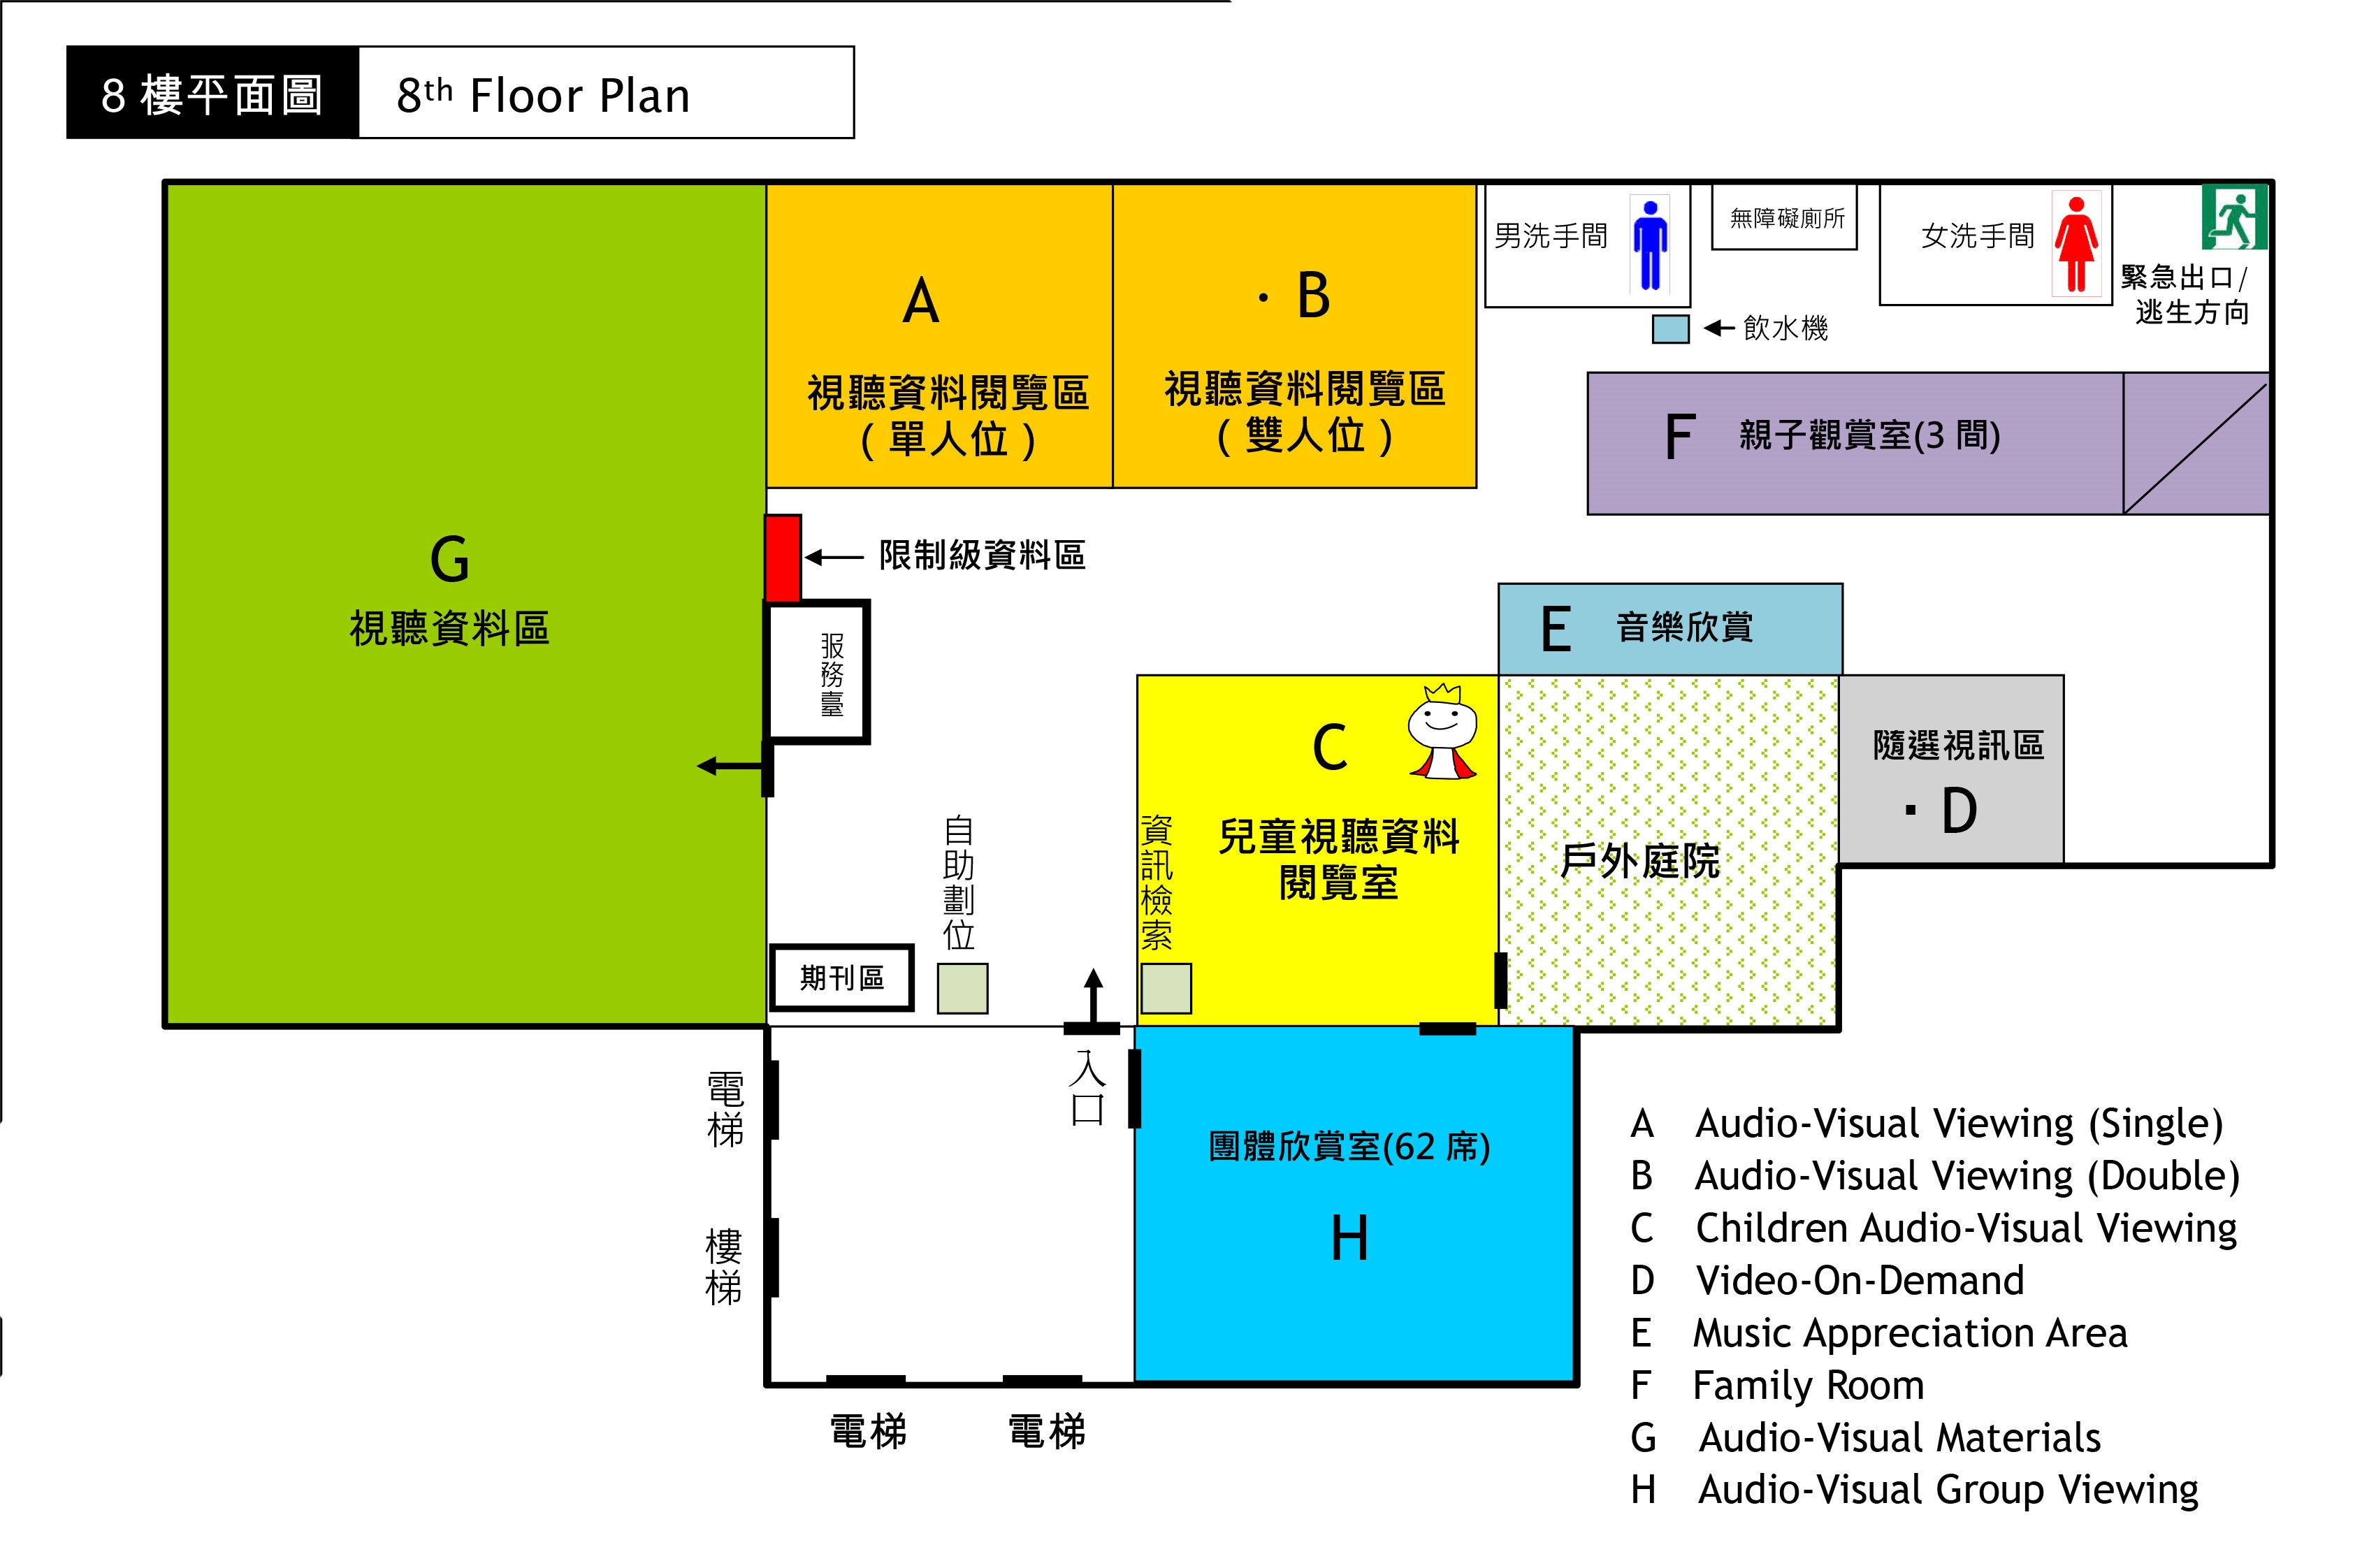 Eighth Floor Plan